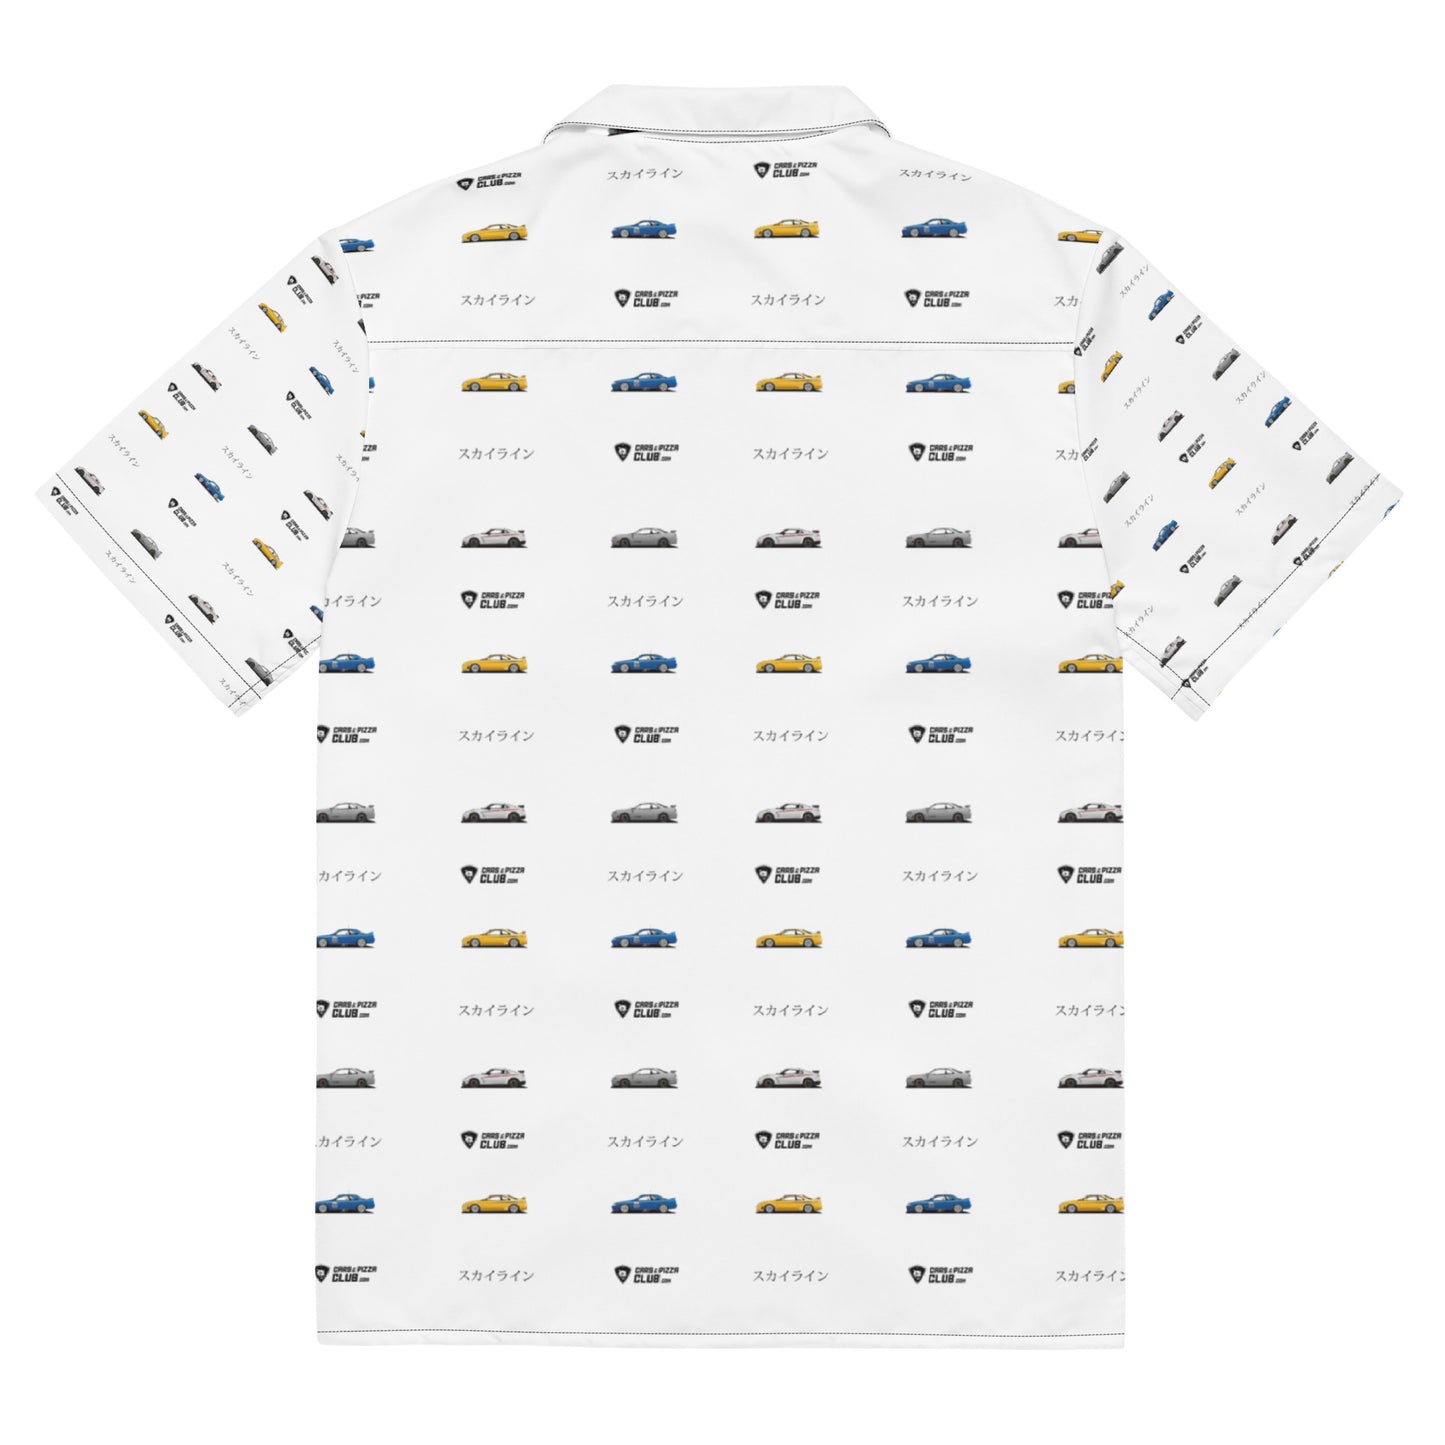 Skyline GTR-Rs Unisex Short Sleeve Shirt